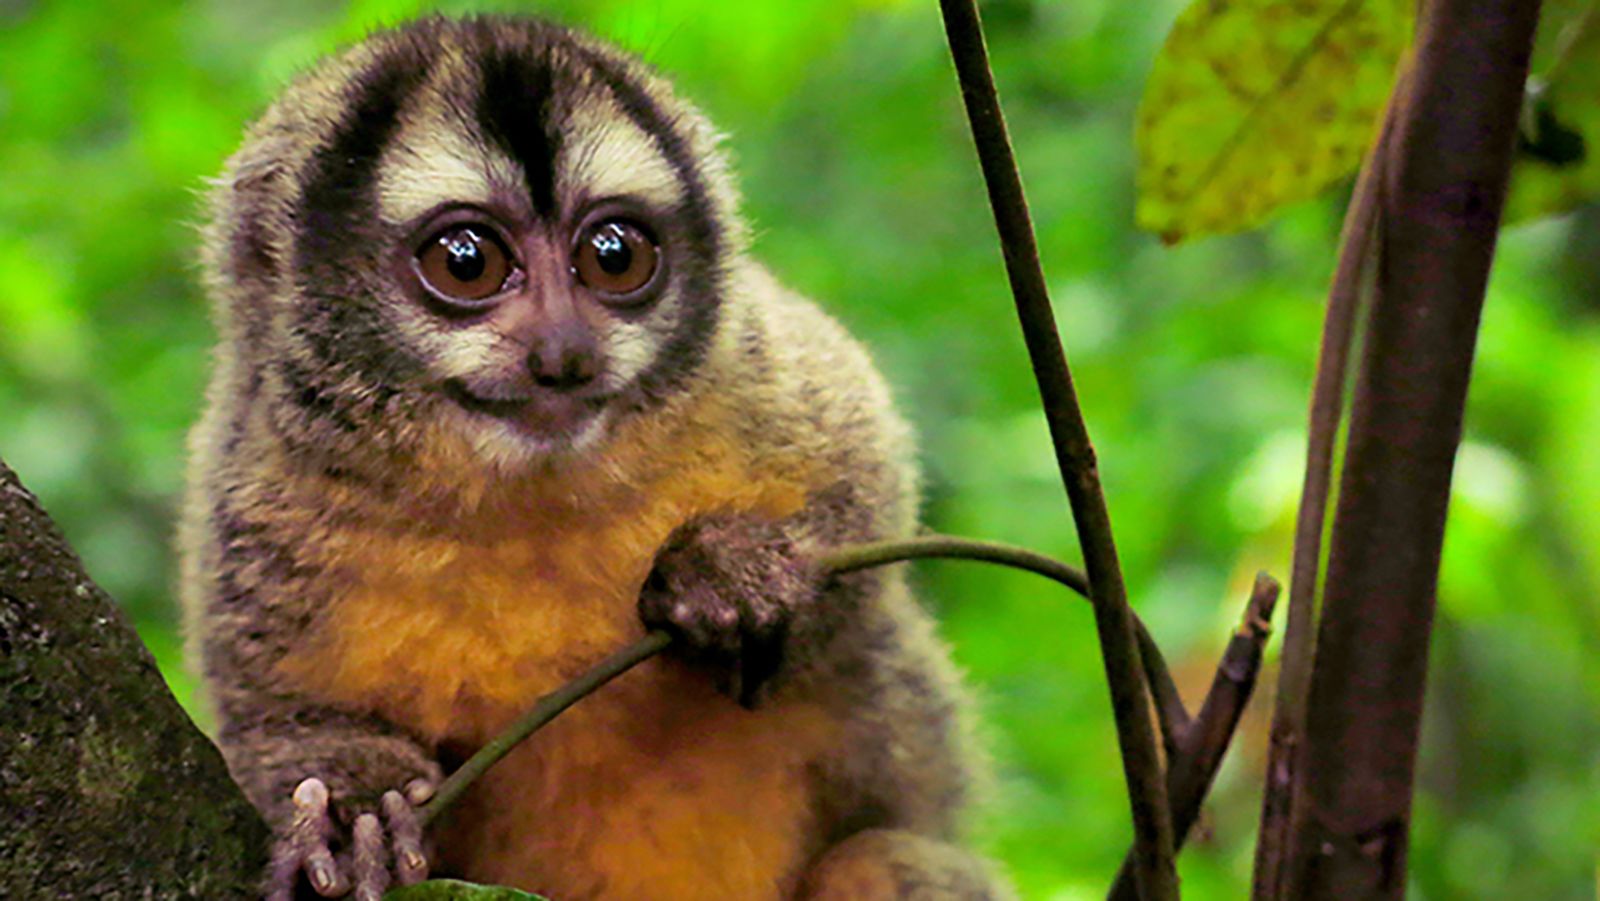 A second chance': Peru sanctuaries help rescued monkeys back into the wild, Global development